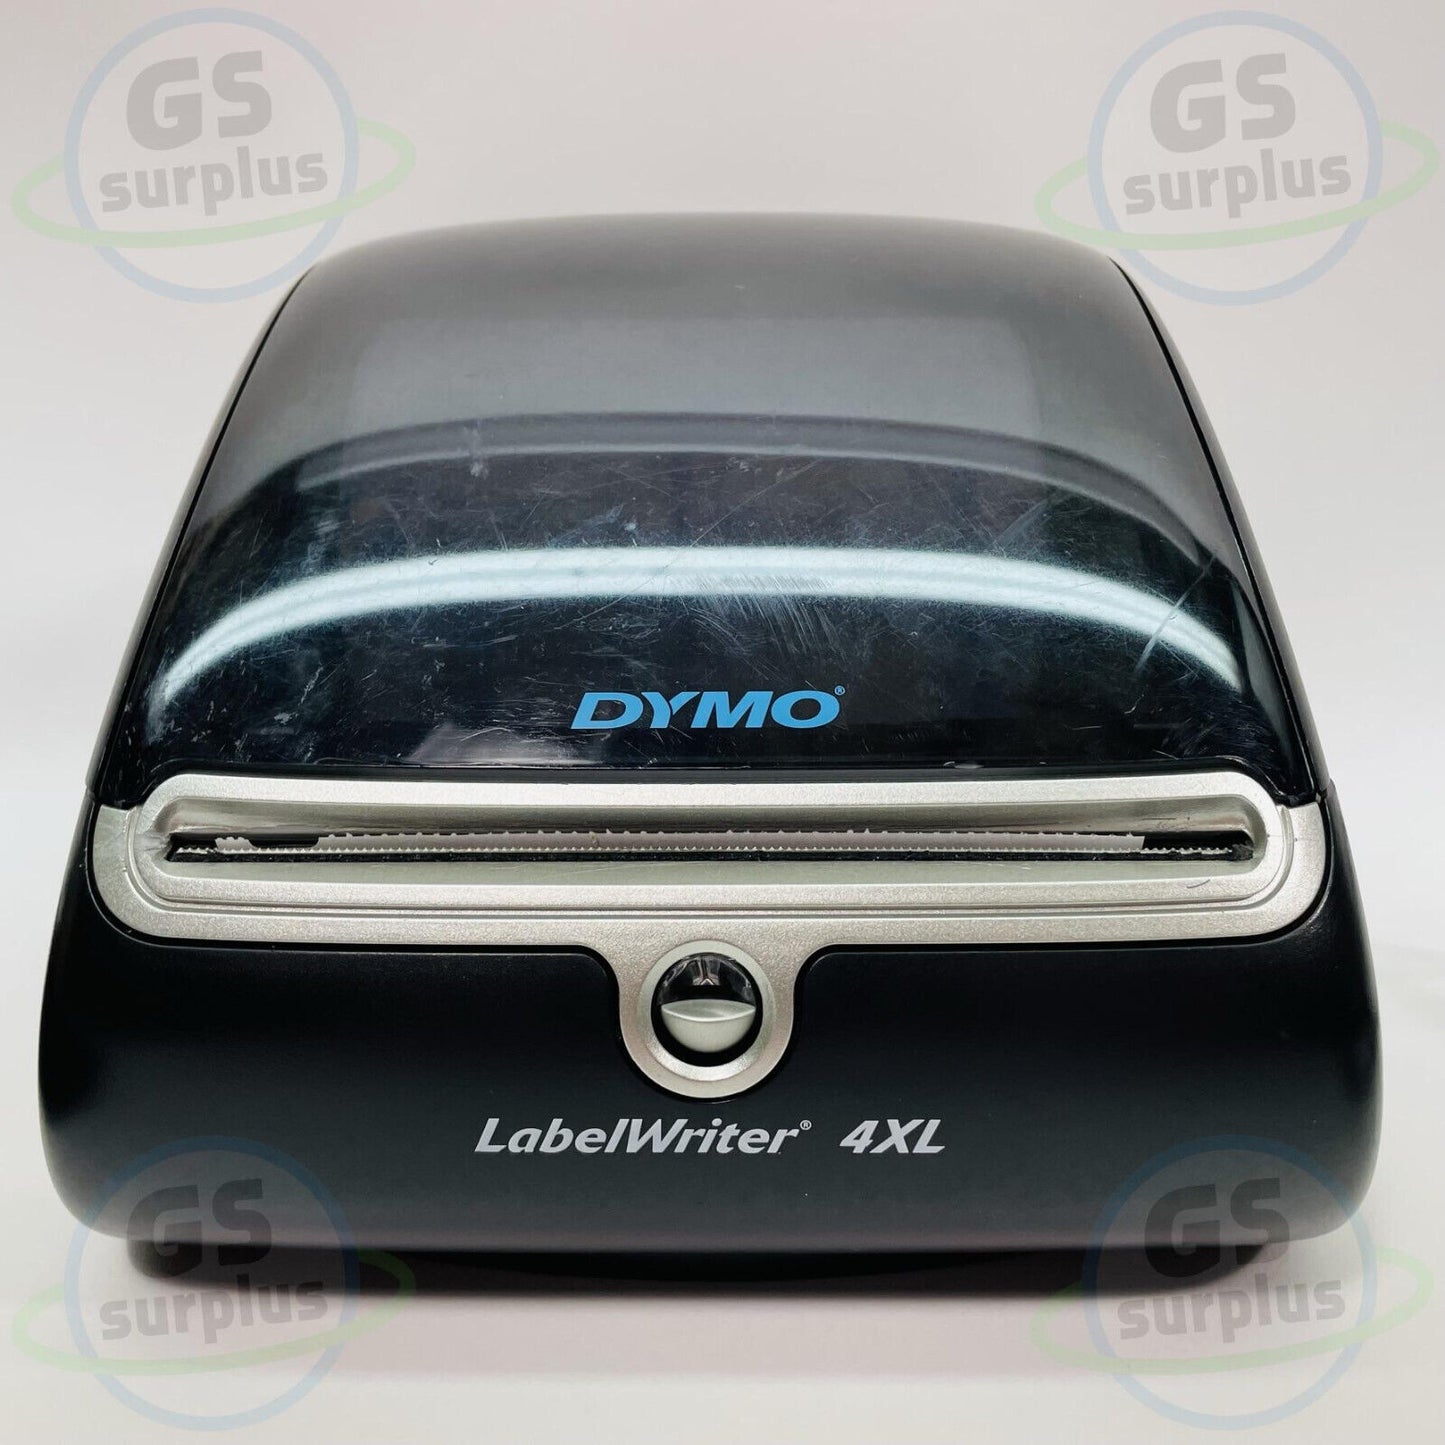 DYMO Labelwriter 4XL Thermal Label Printer Model 1738542